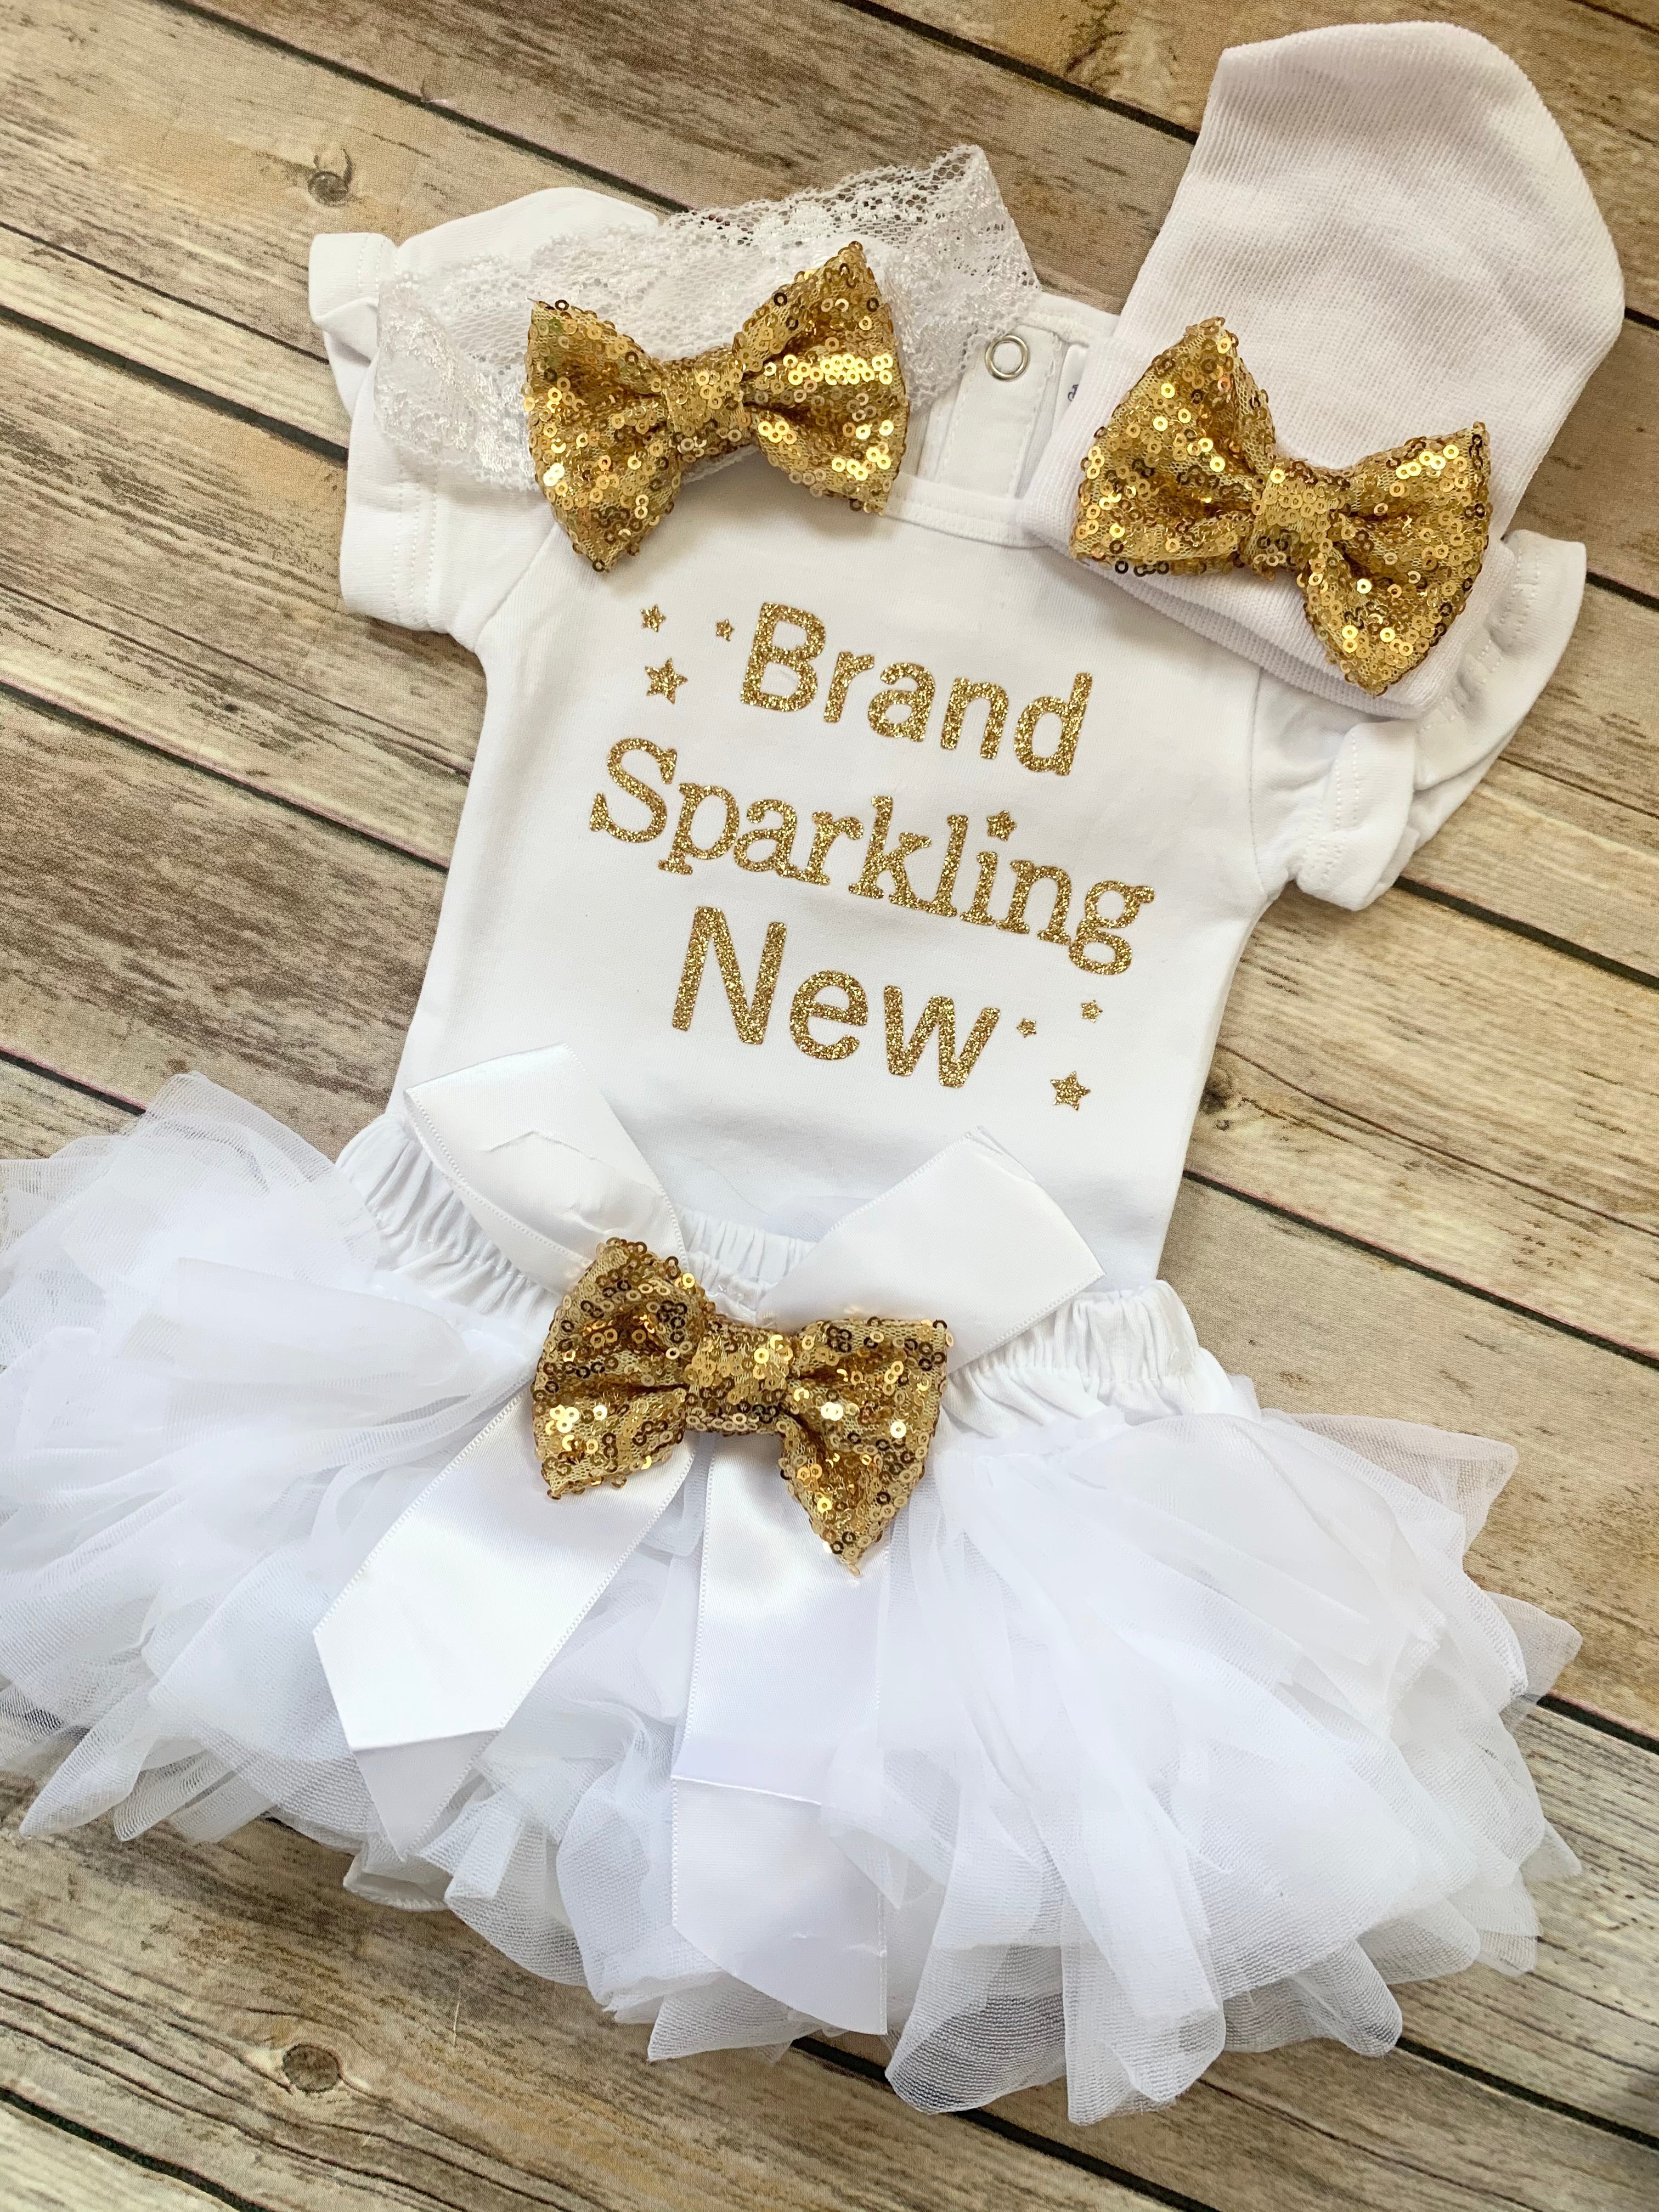 Brand sparkling new- Gold